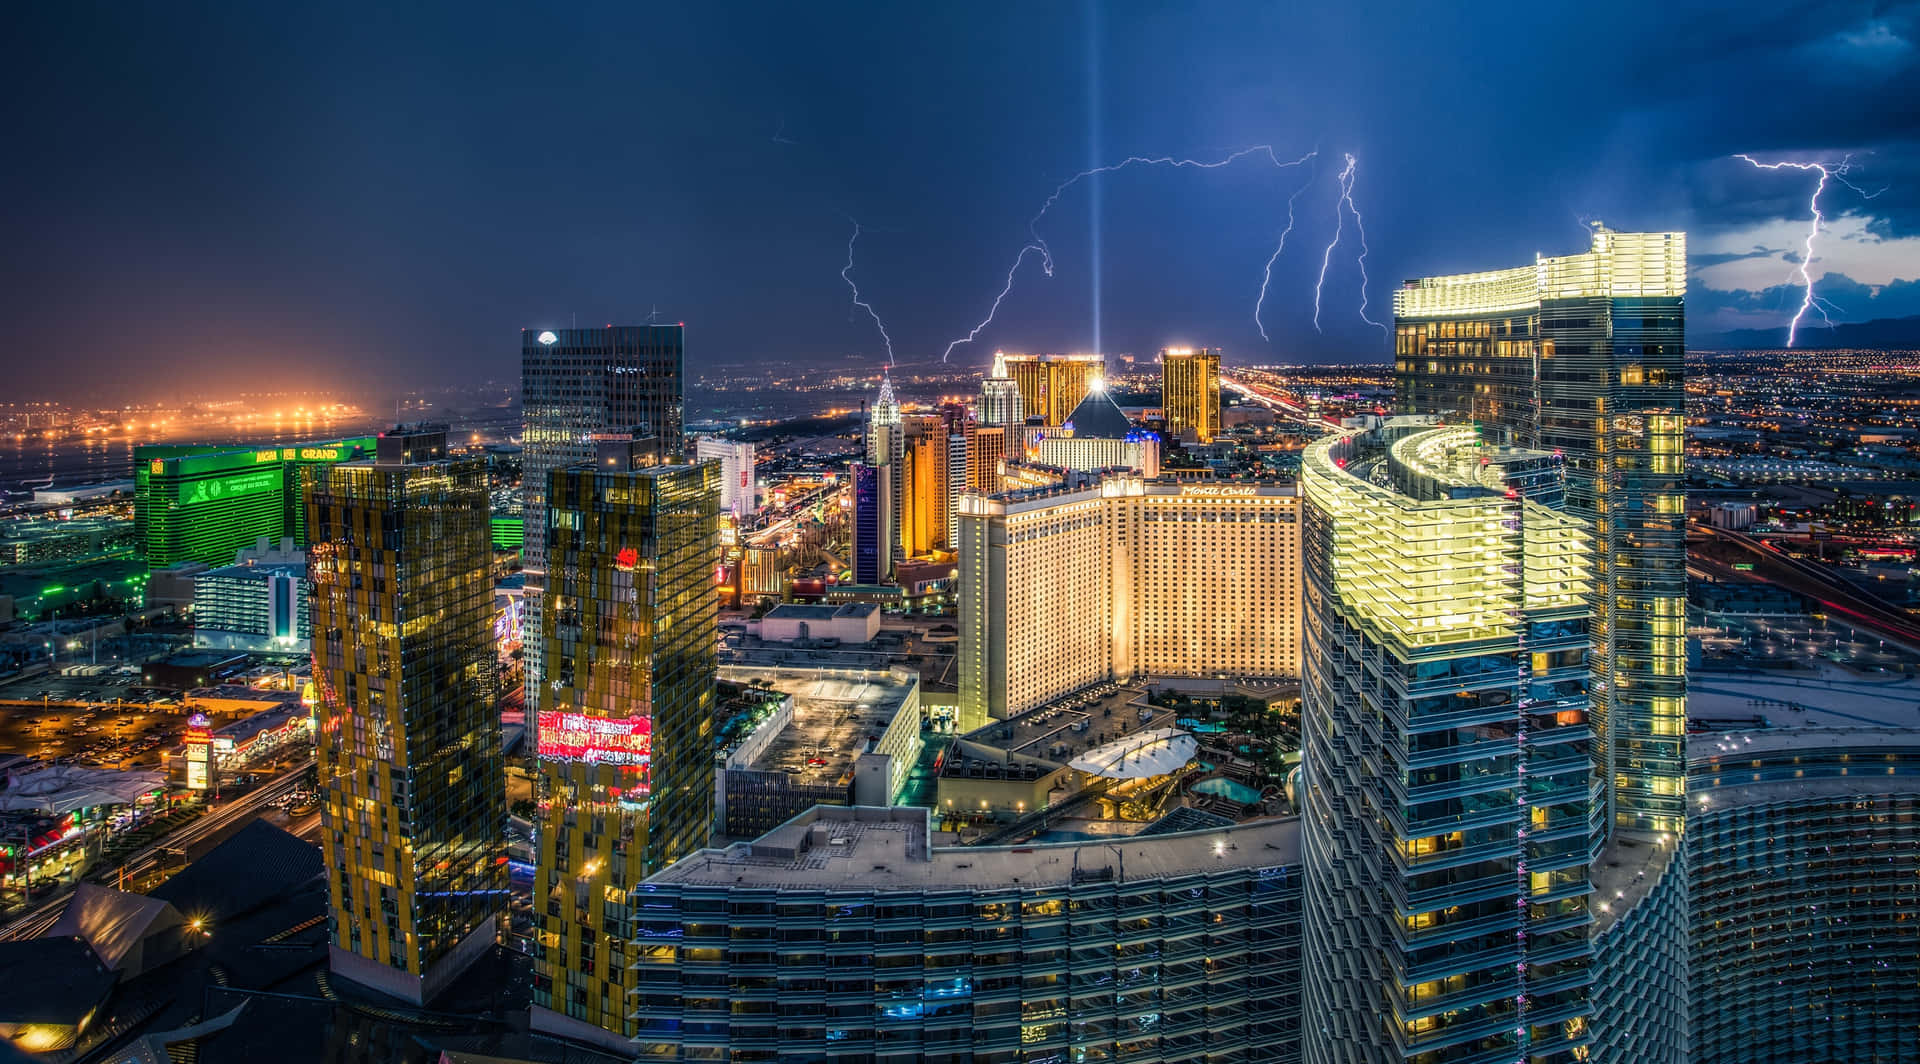 Image  Bright lights, grand casinos - the iconic city of Las Vegas